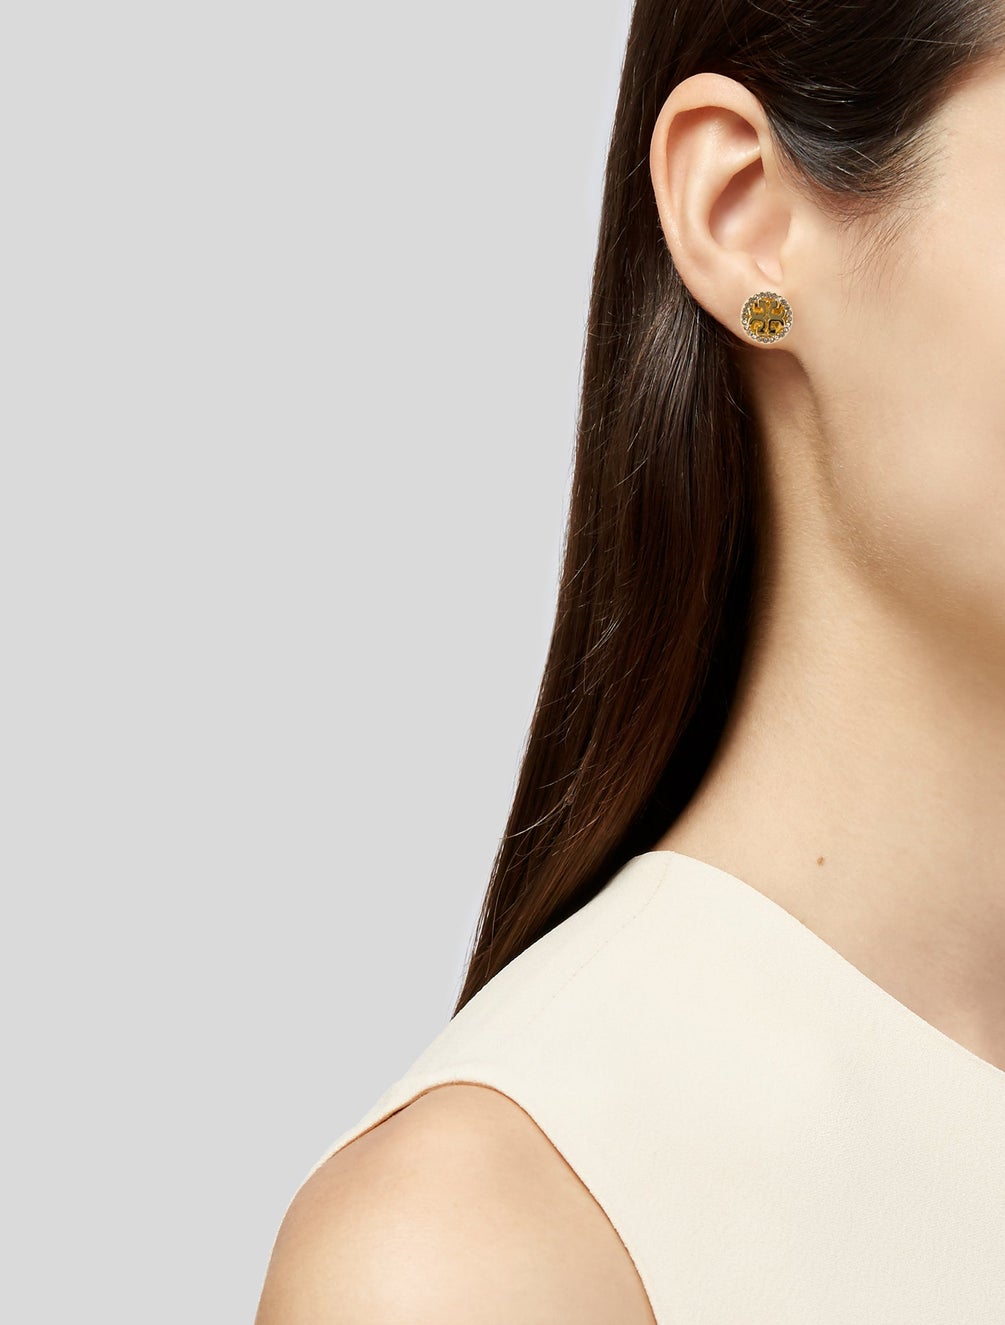 Tory Burch Logo Flower Resin Stud Earrings, Gold Plated Metal - Gold